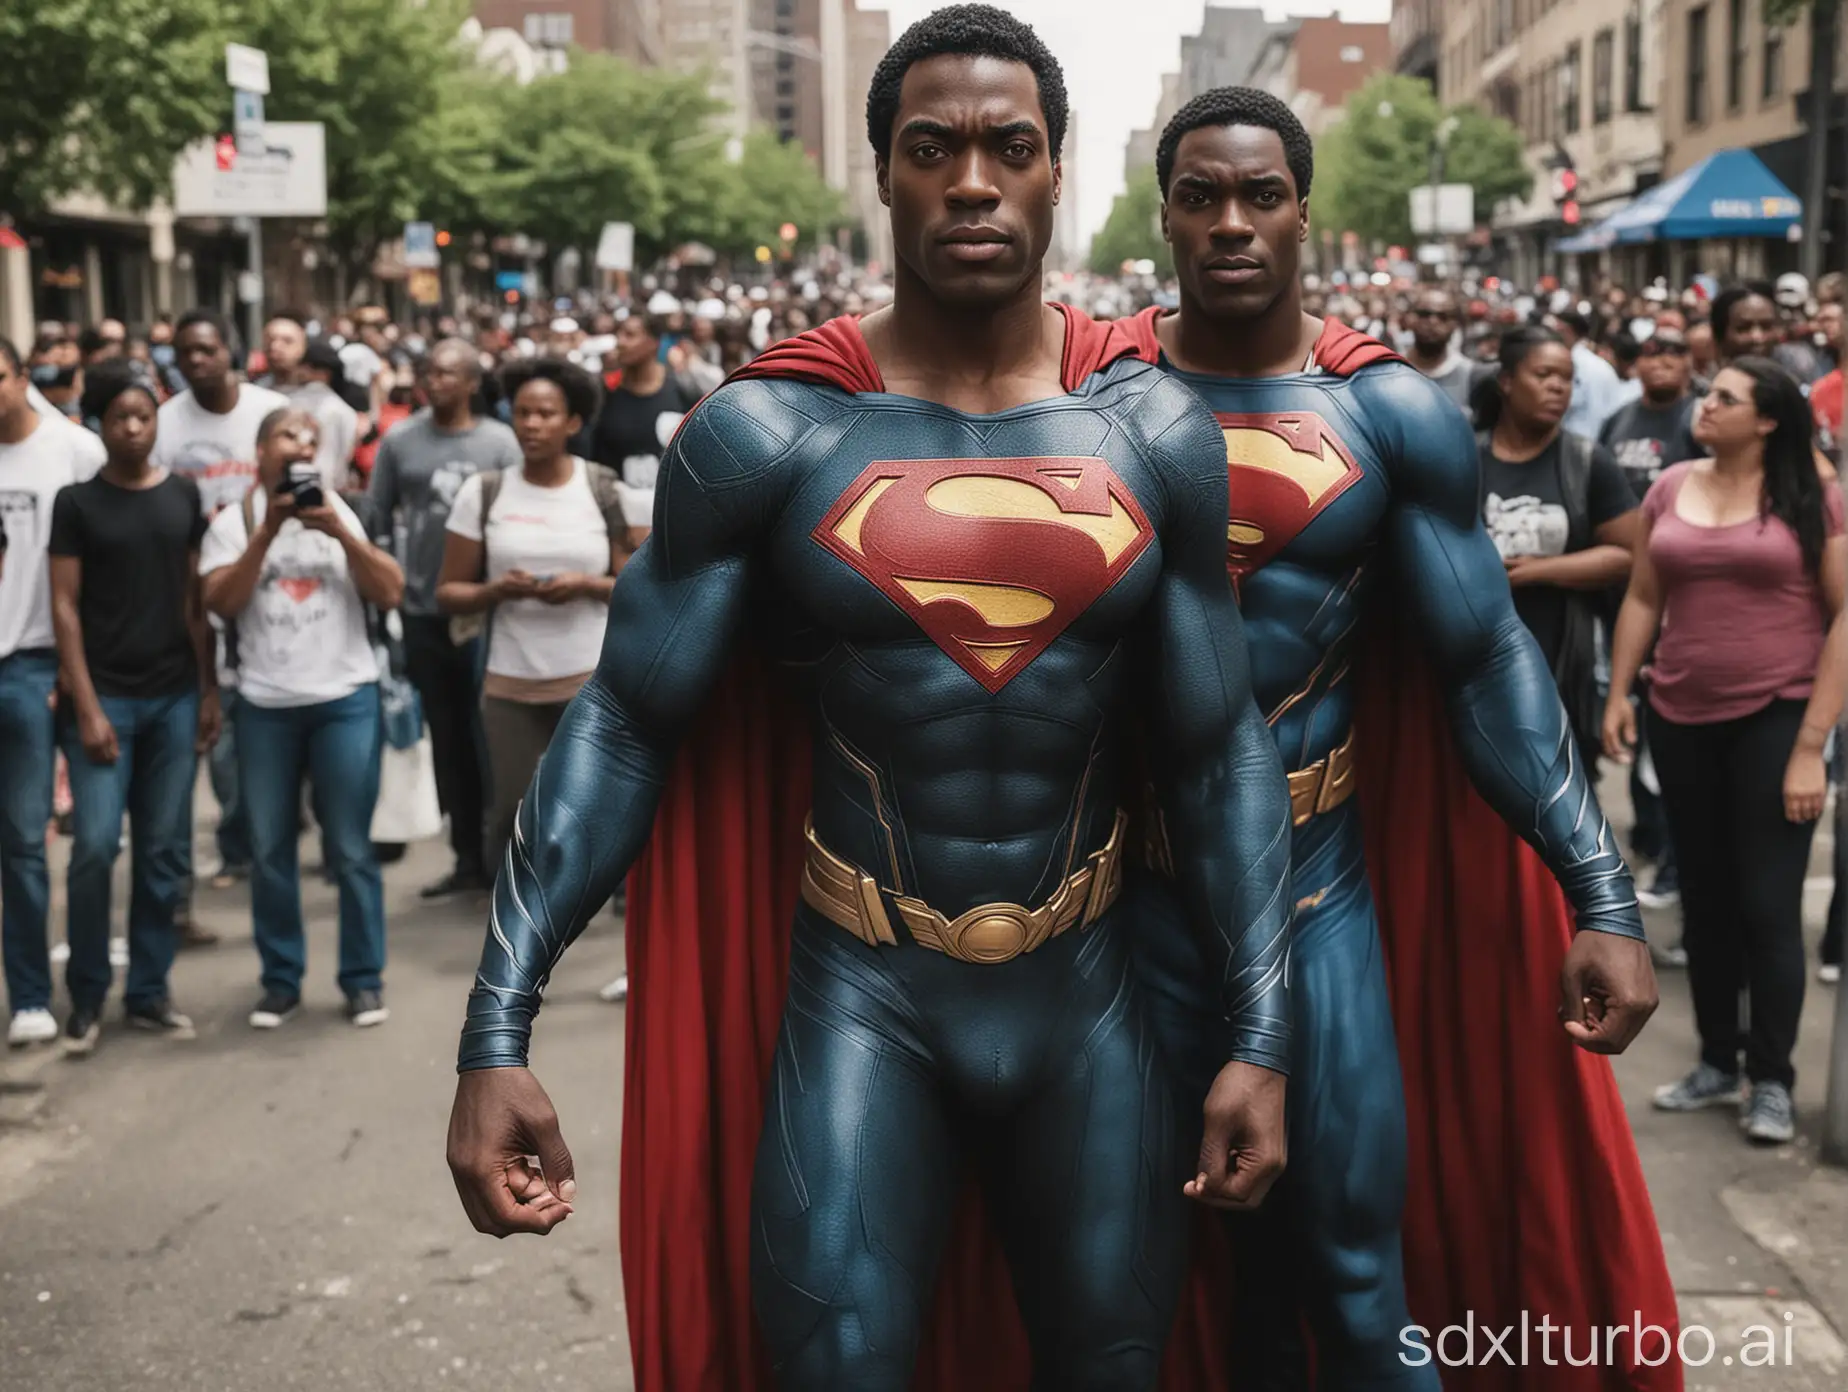 Black-Superman-Assisting-Community-Members